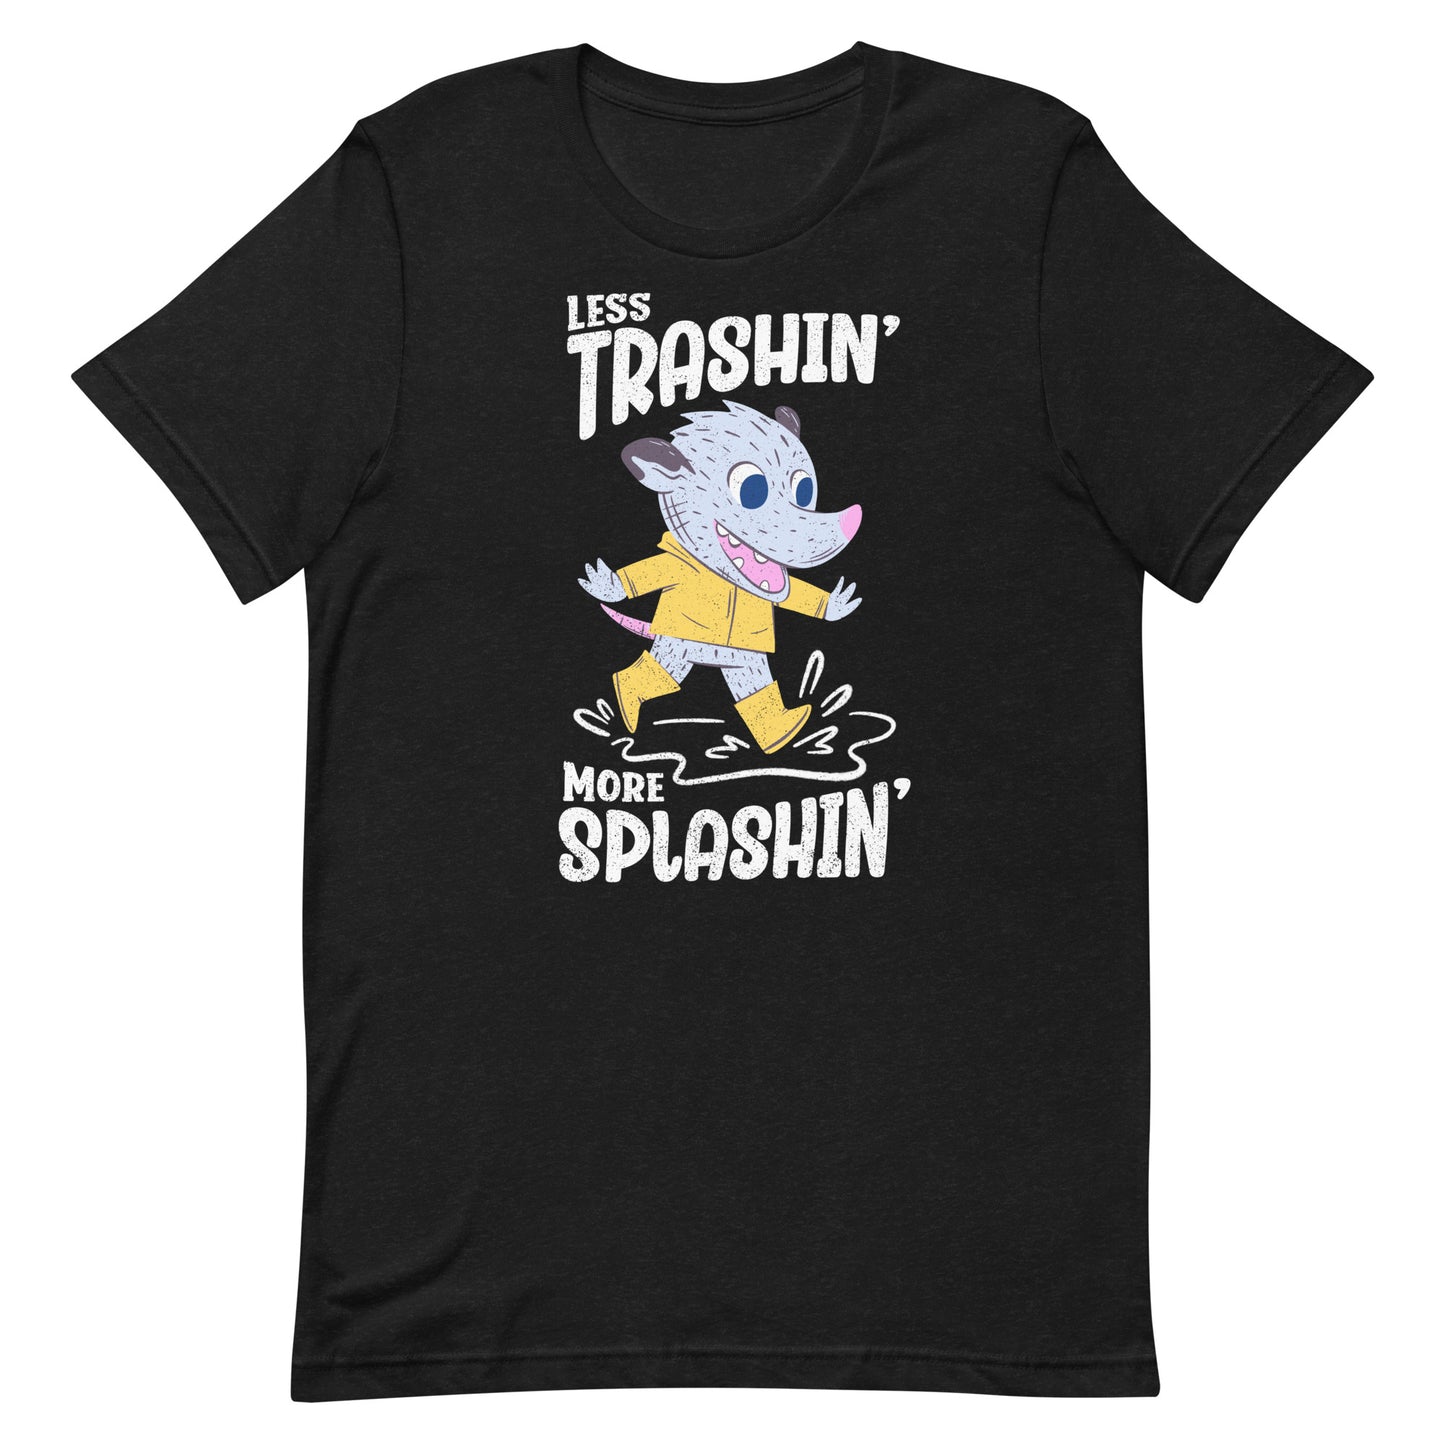 Less Trashin' More Splashin' Funny Rainy Day T-shirt